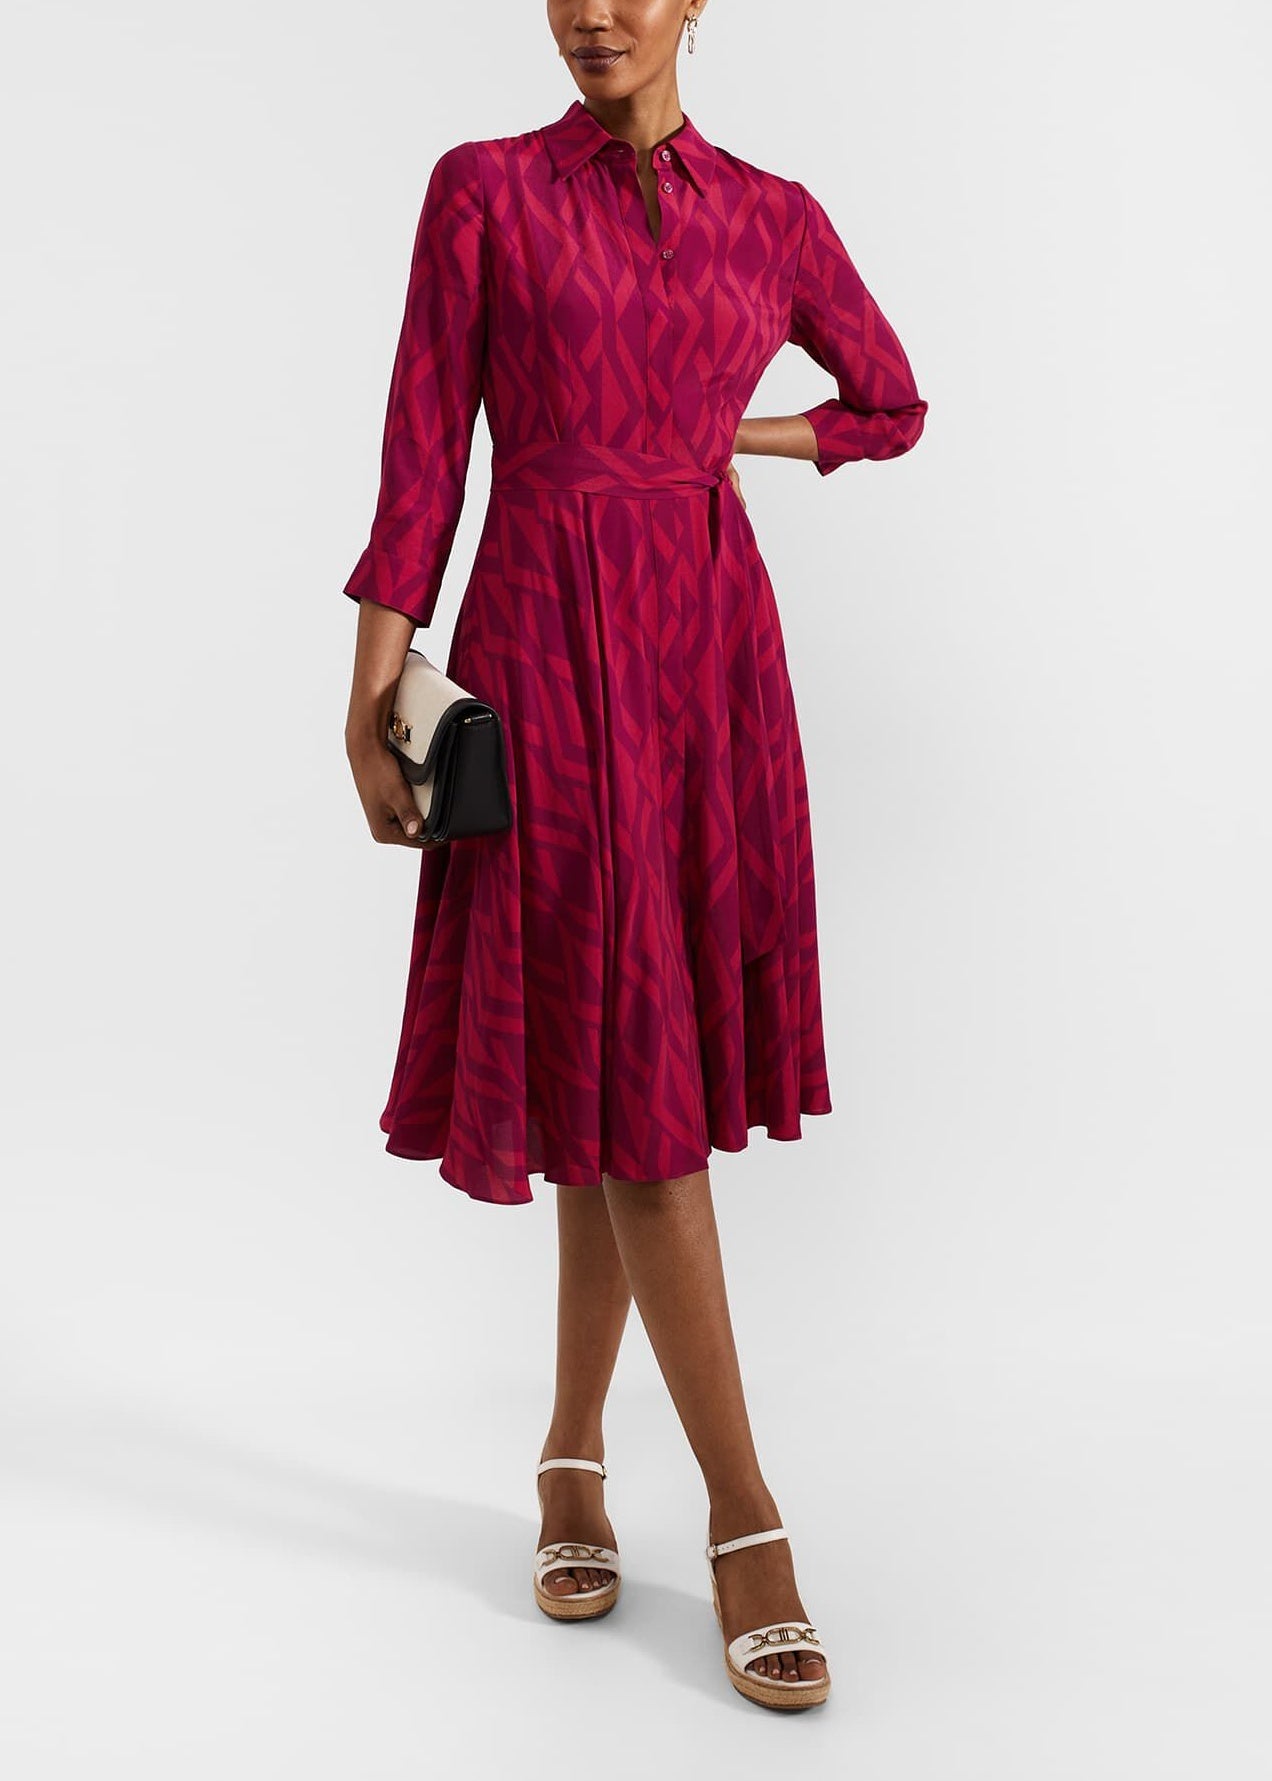 Lainey Dress 0124/5868/9021l00 Pink-Multi